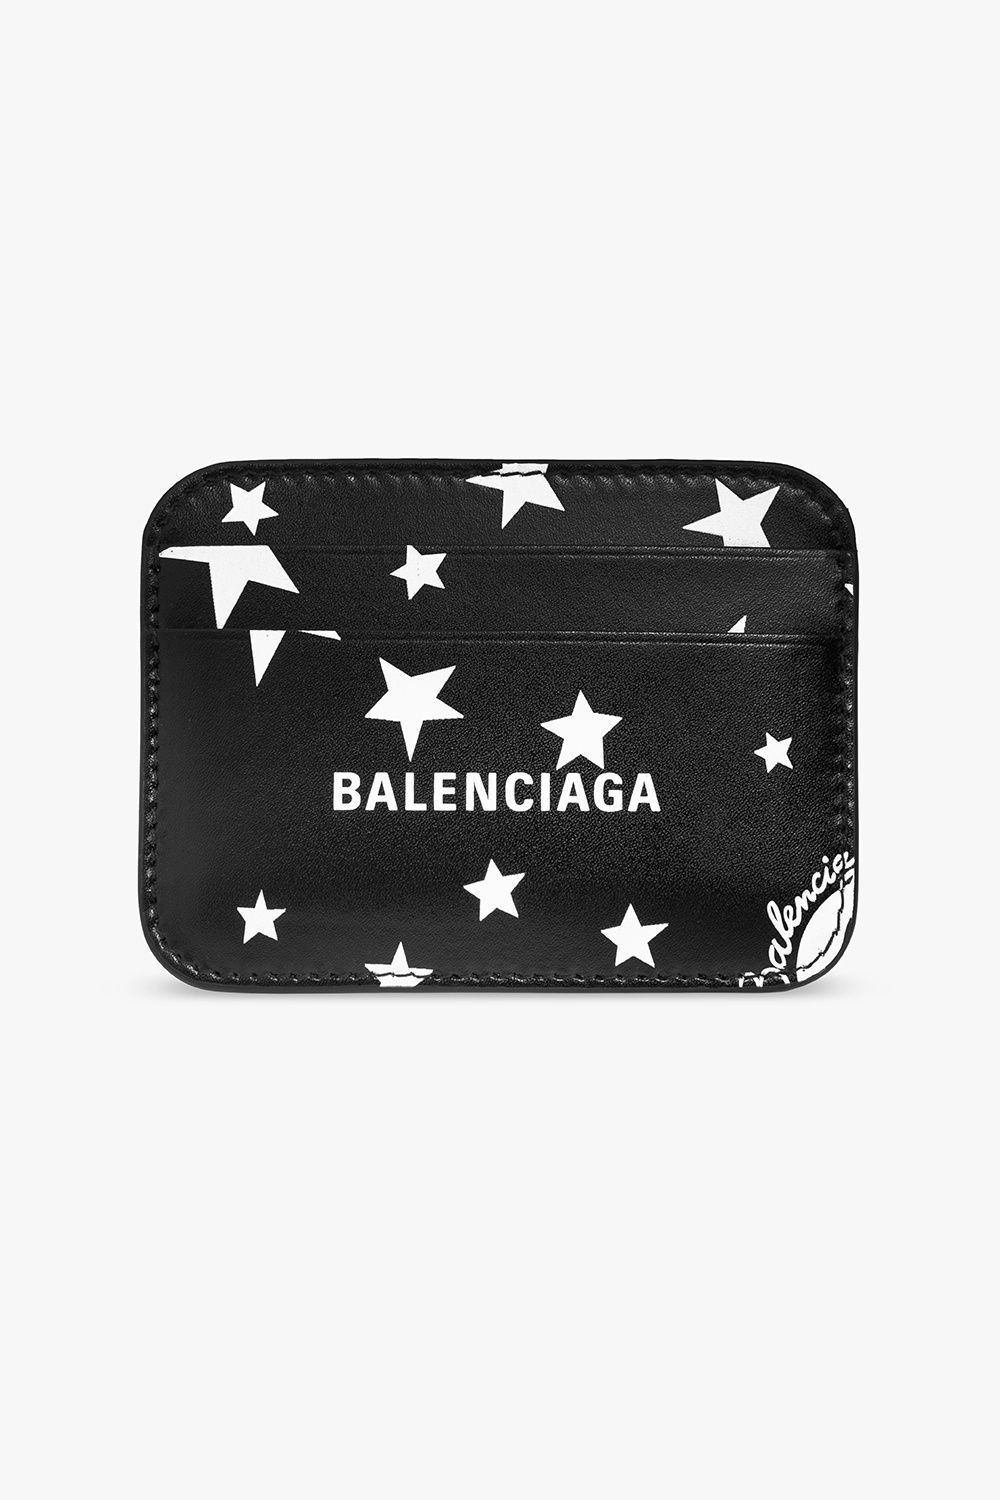 Balenciaga Discover a unique project